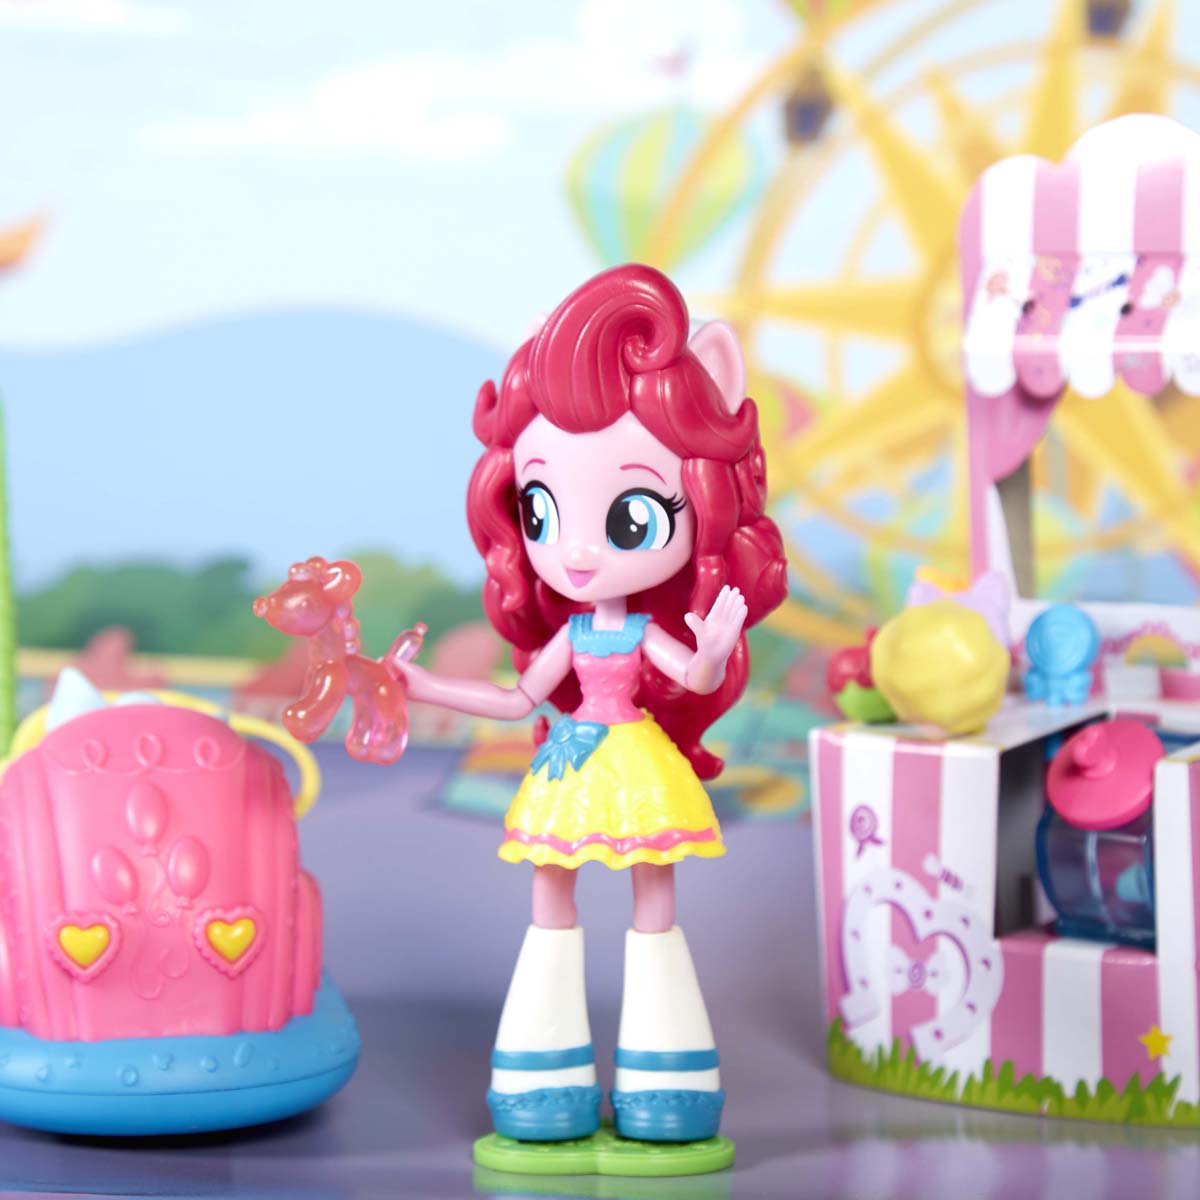 фото Игровой набор с мини-куклой My Little Pony "Pinkie Pie. Bumper Cars and Candy Fun". B8824_B2619